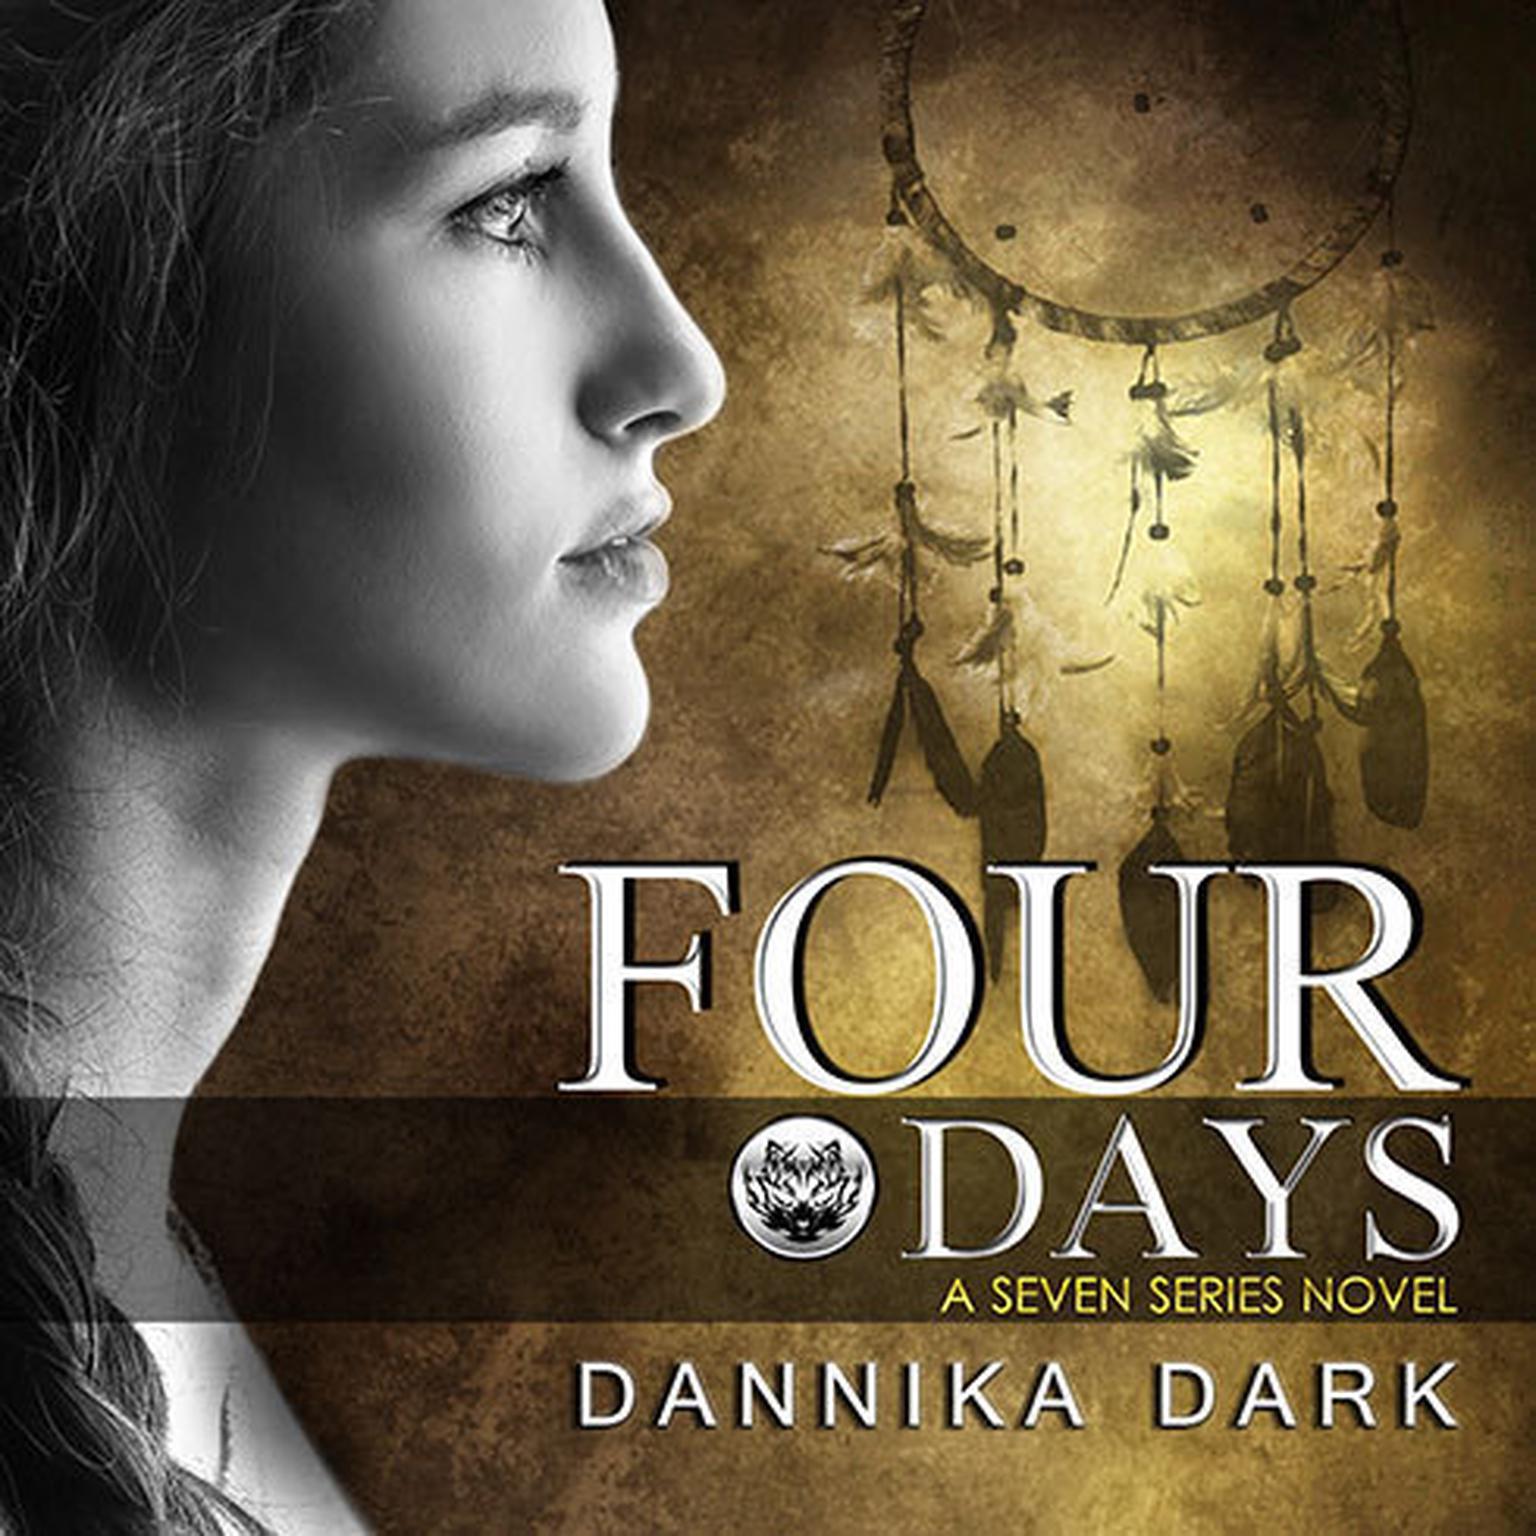 Four Days Audiobook, by Dannika Dark